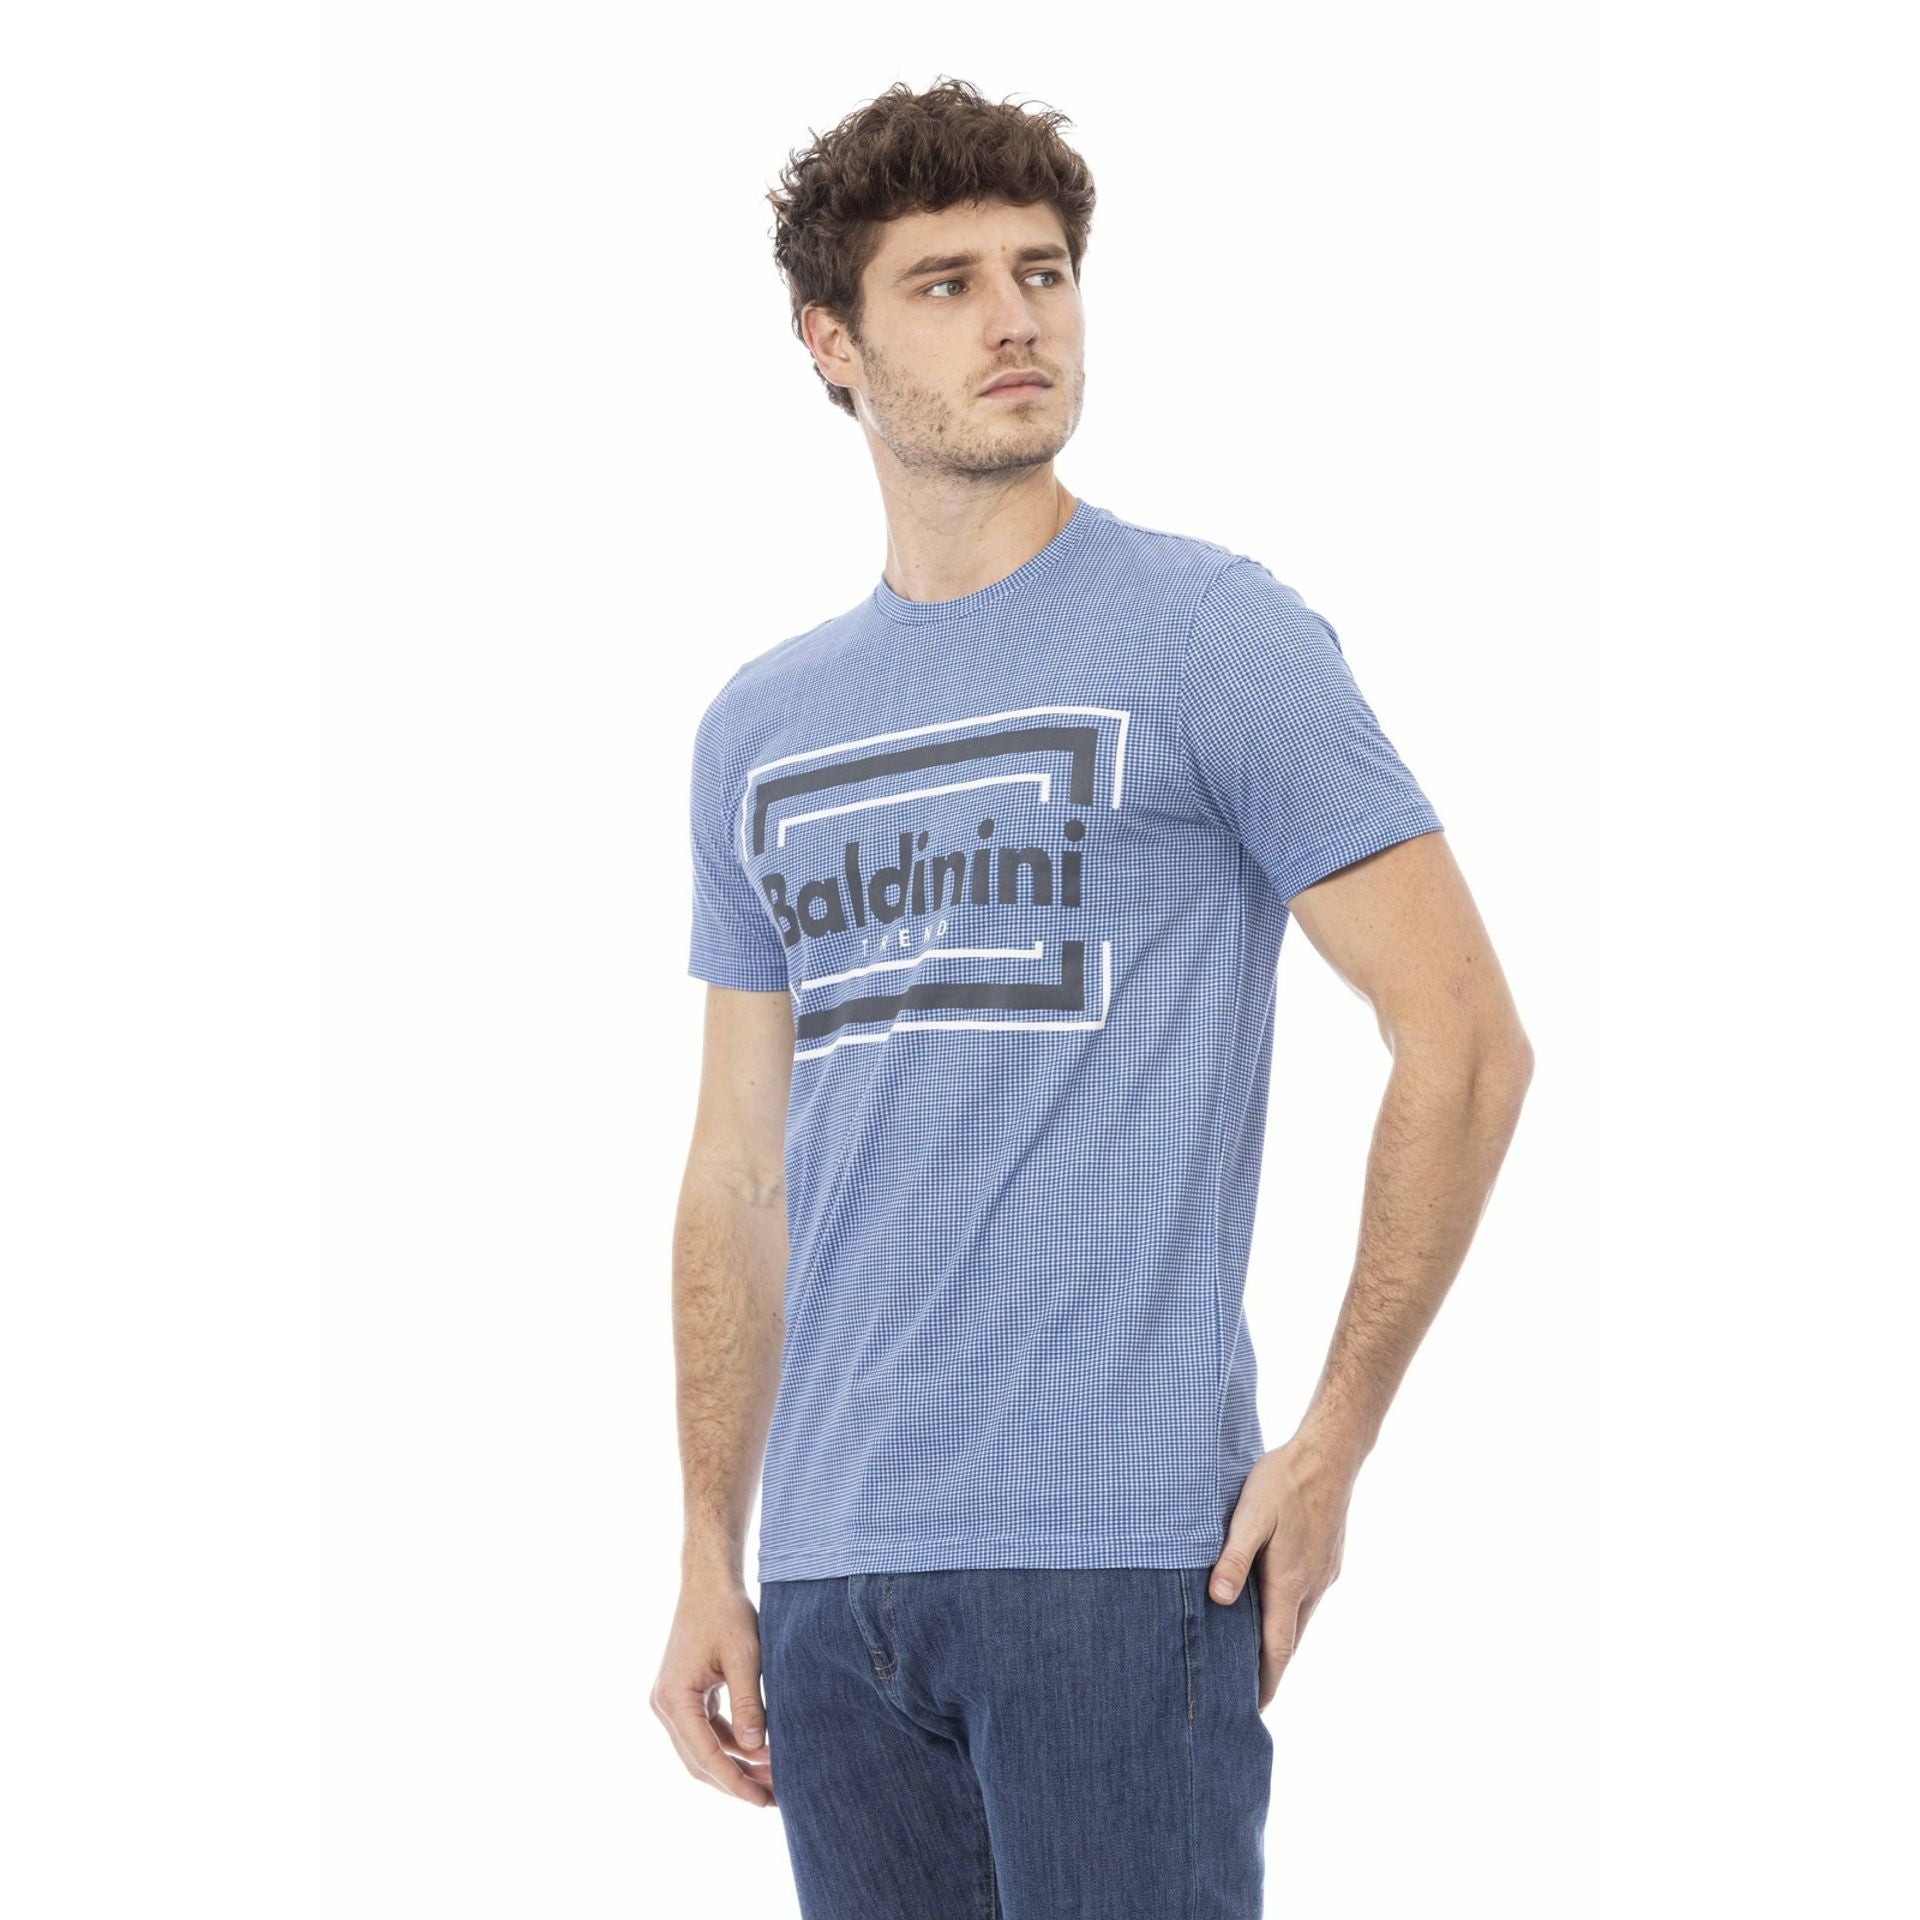 Baldinini Trend T-shirts